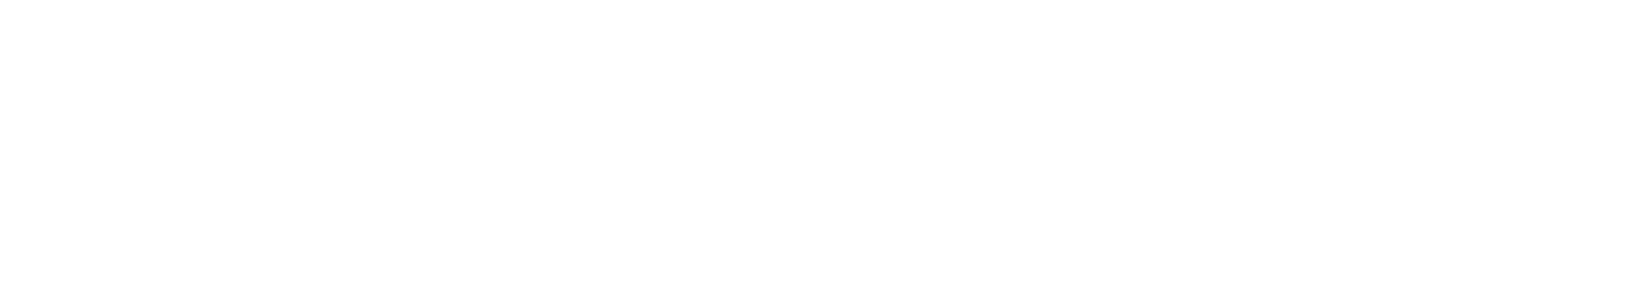 Macquarie logo large for dark backgrounds (transparent PNG)